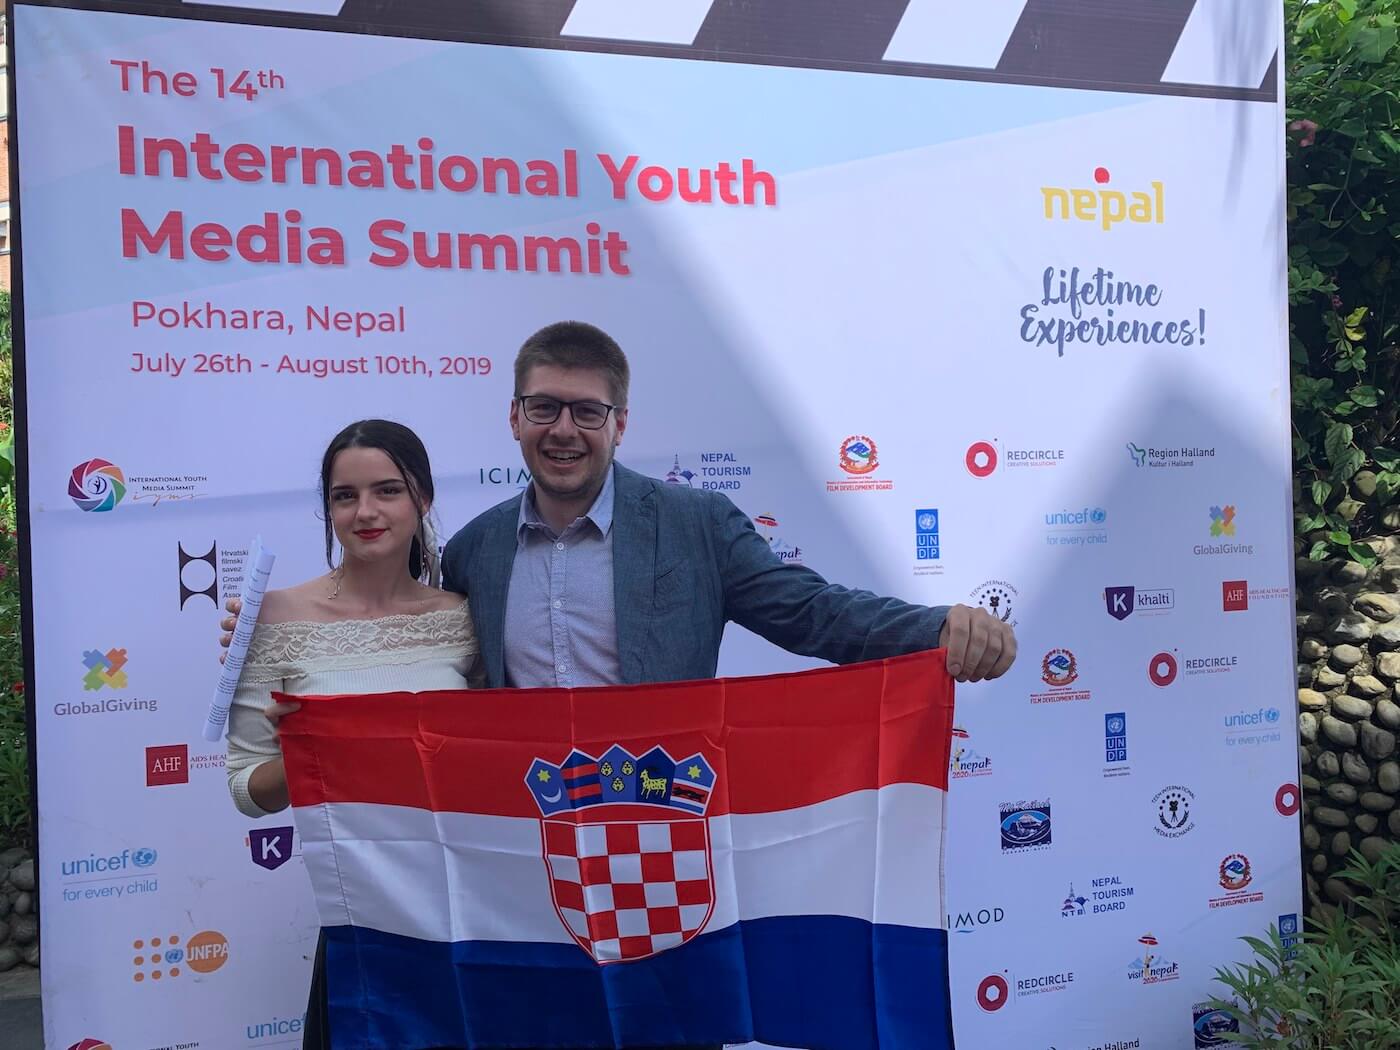 Croatian delegation at the 14th International Youth Media Summit